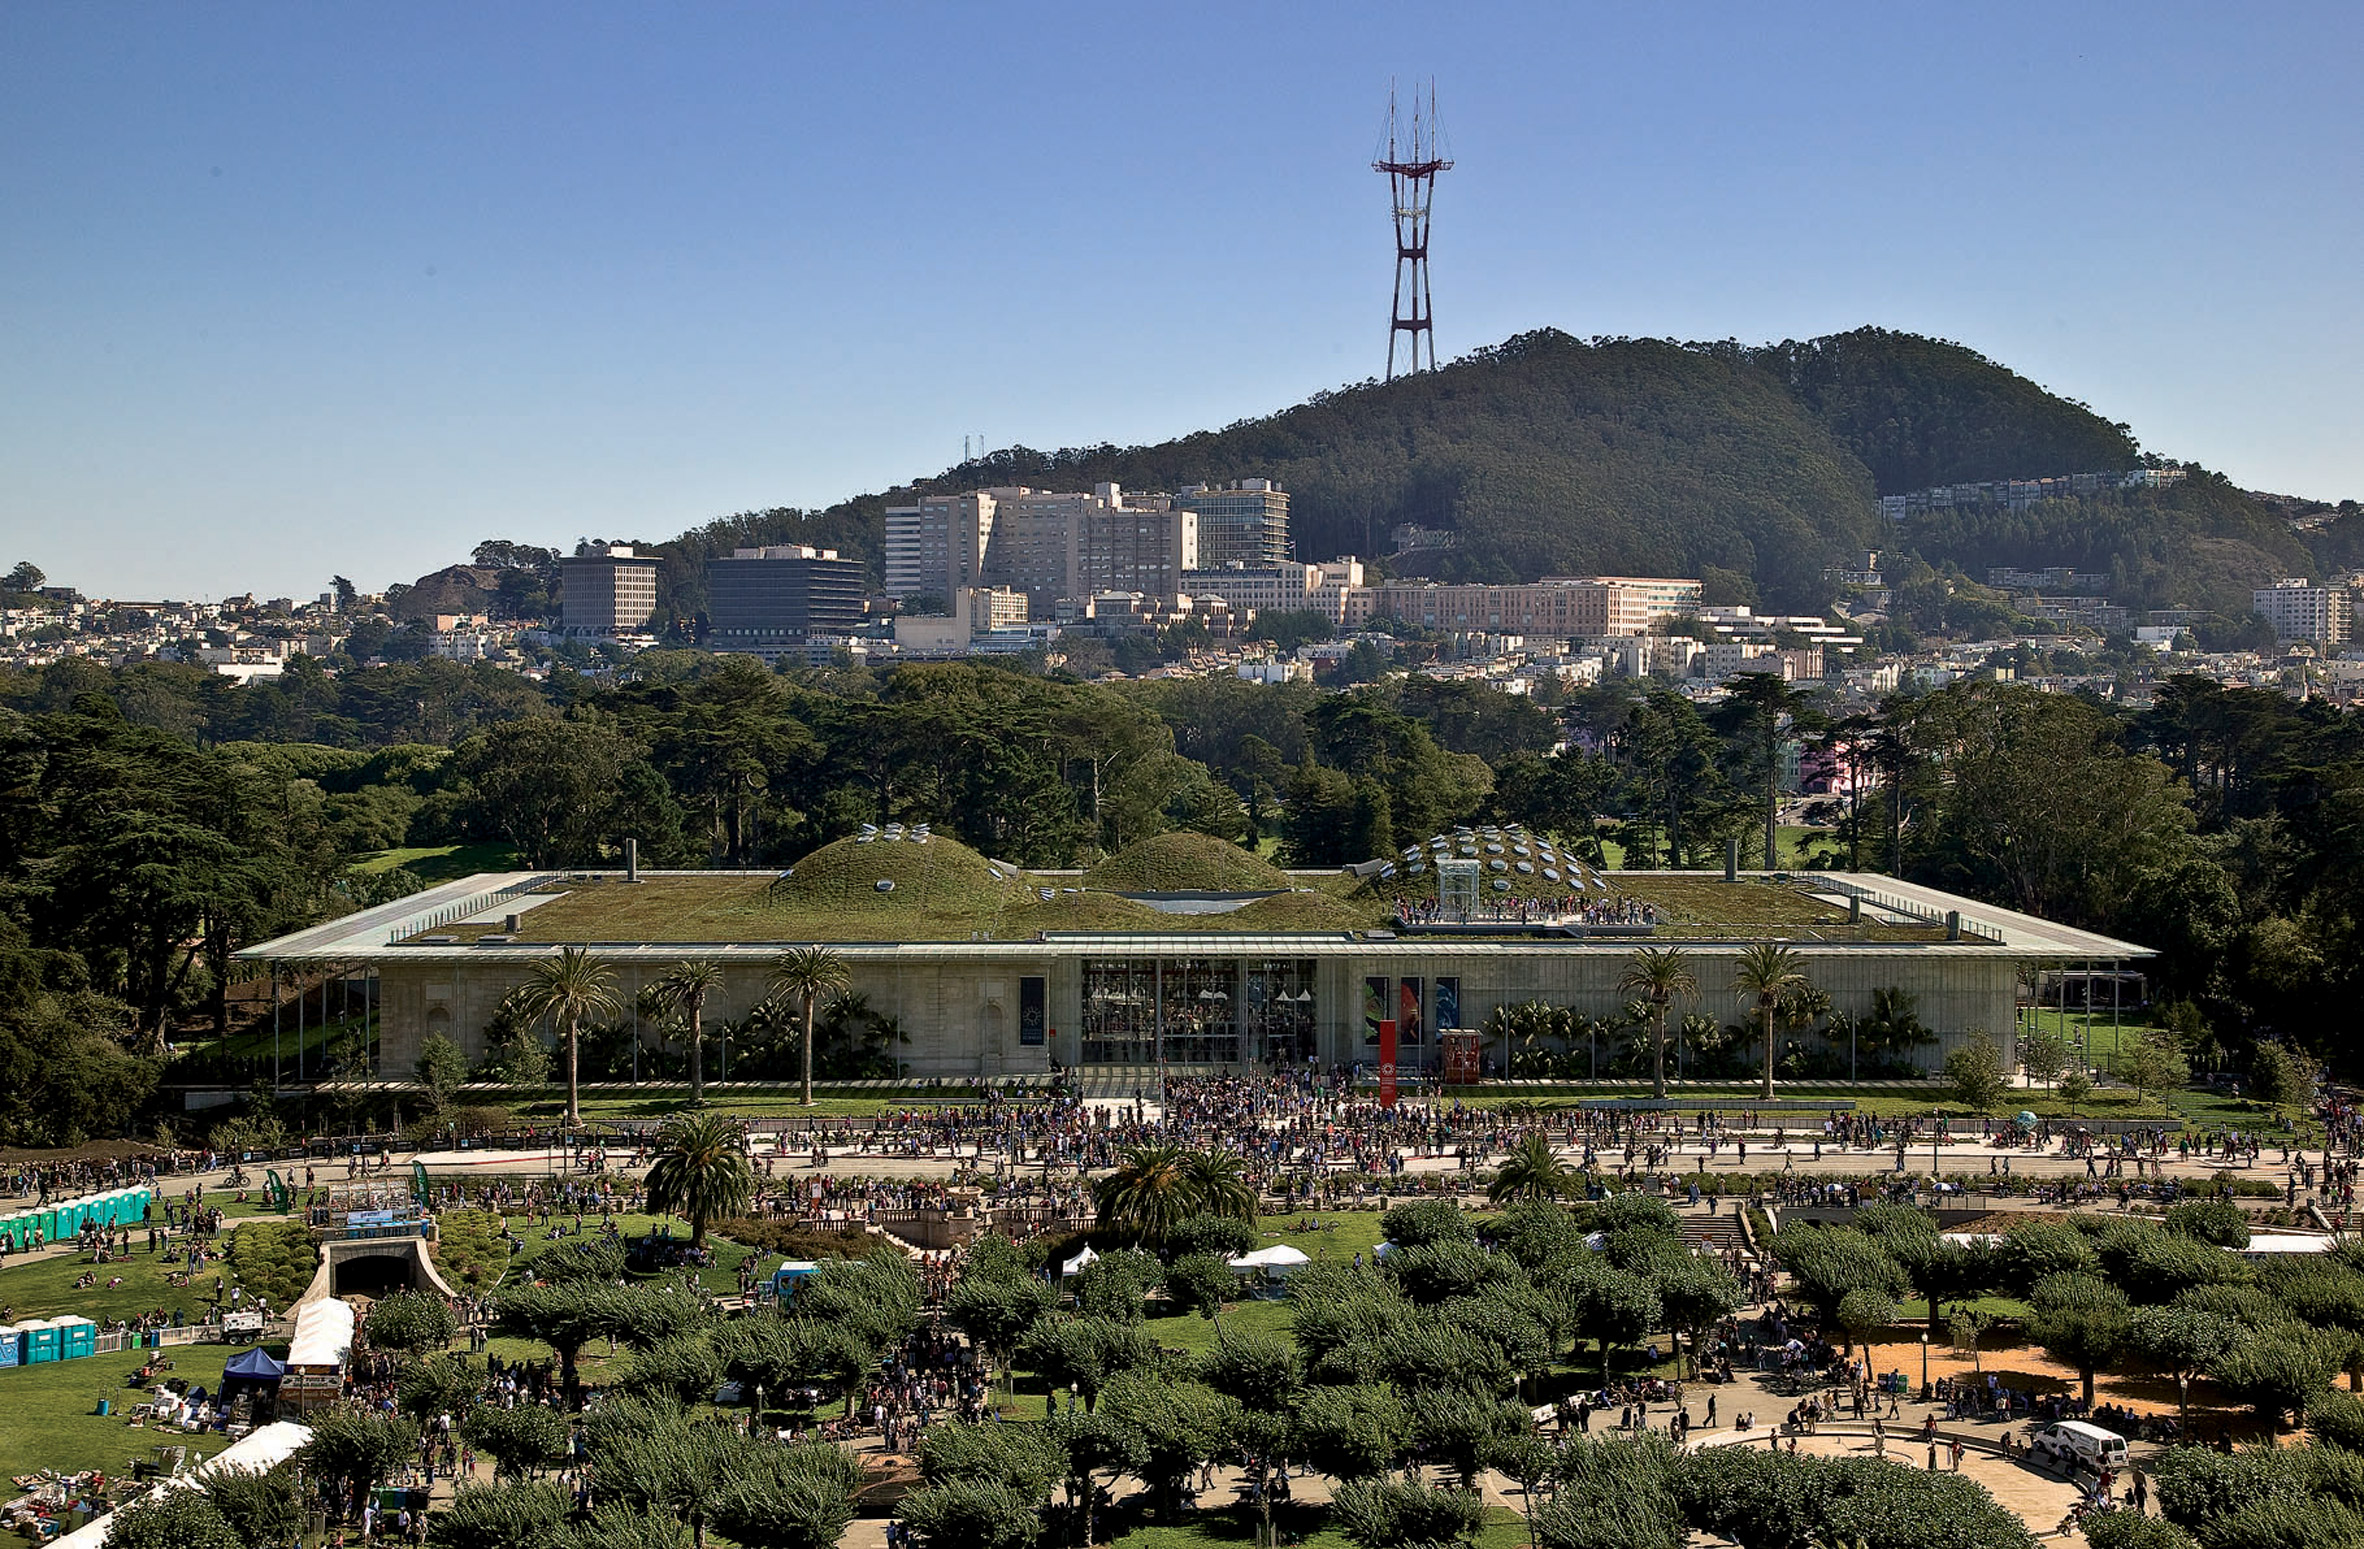 High-tech architecture: Renzo Piano